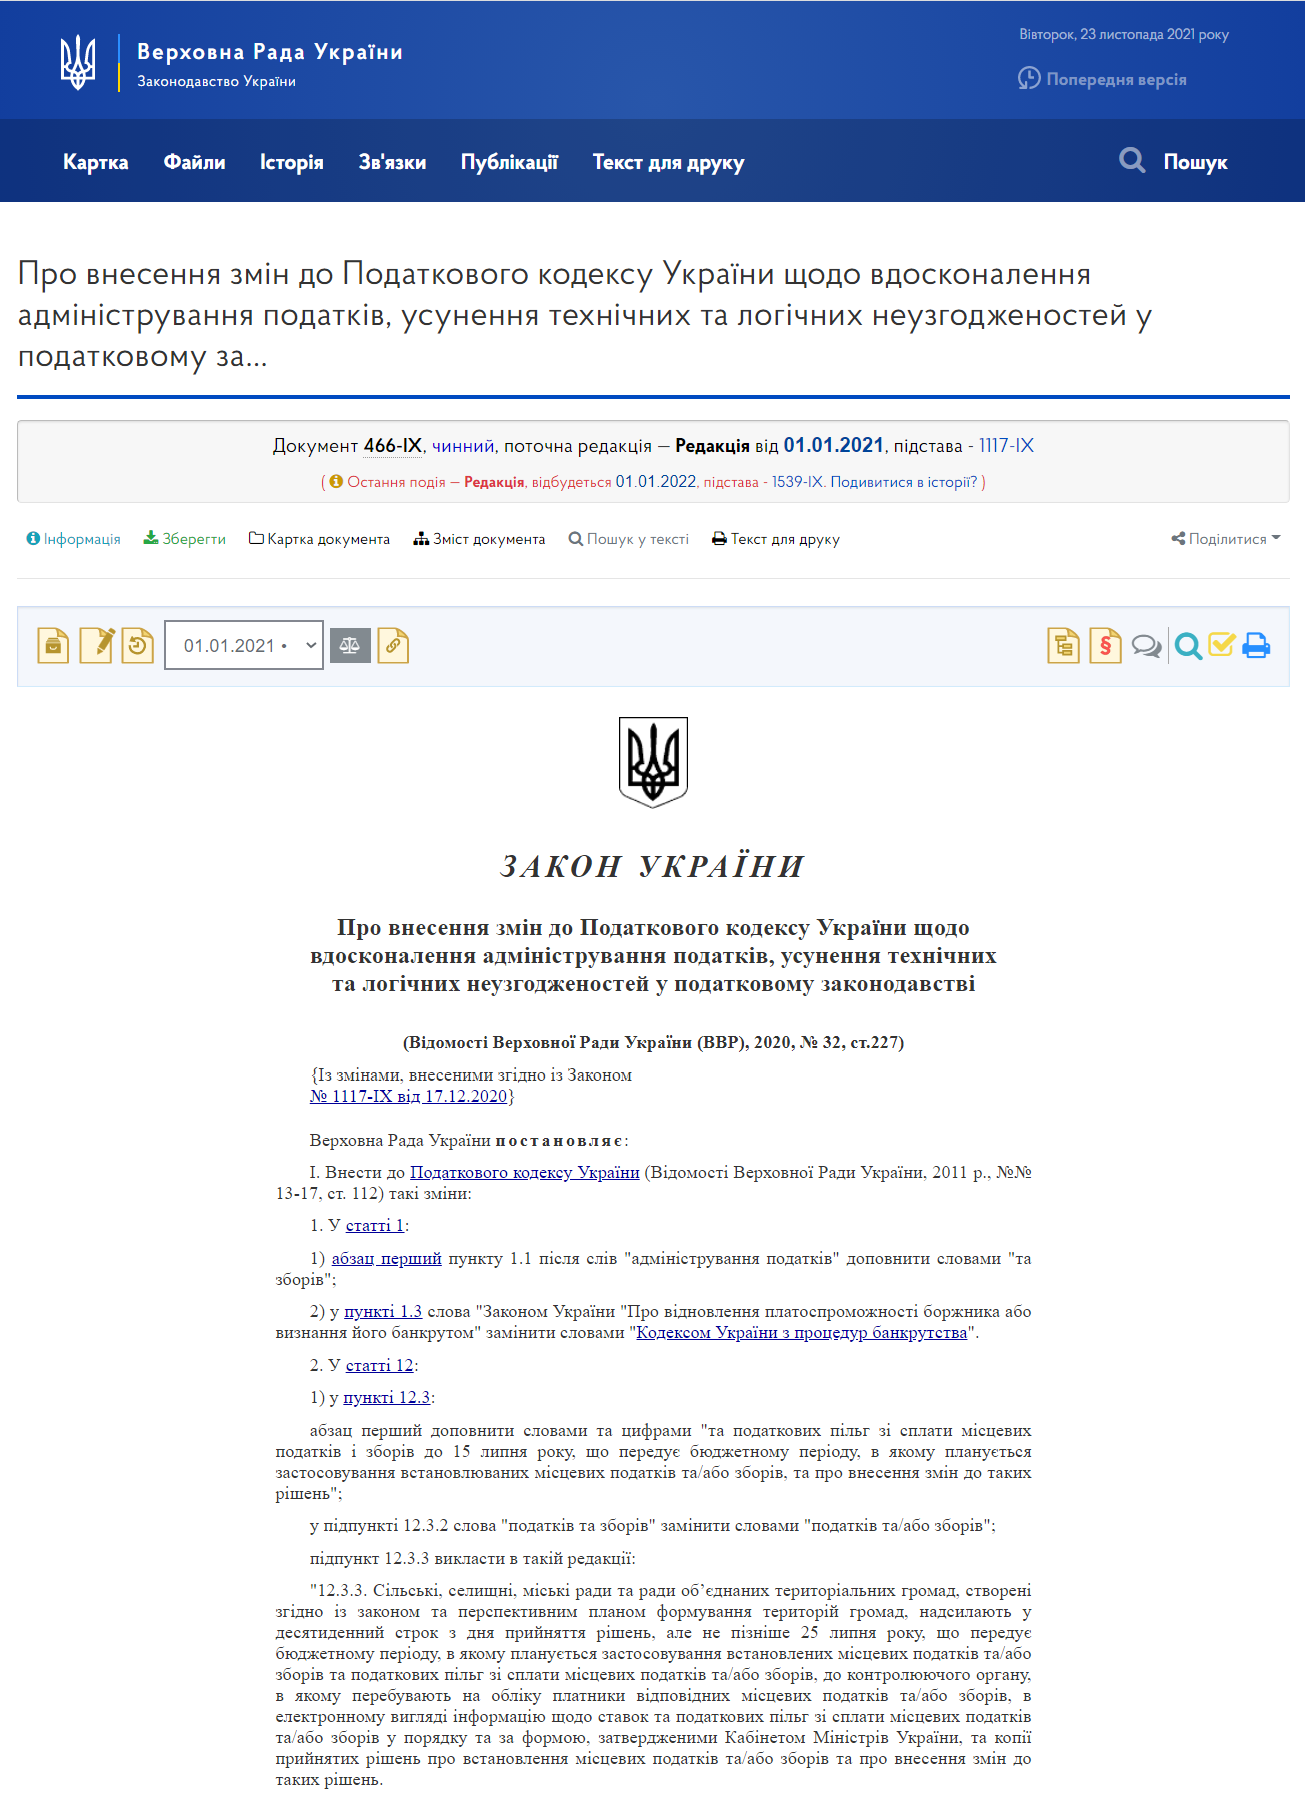 https://zakon.rada.gov.ua/laws/show/466-IX#Text